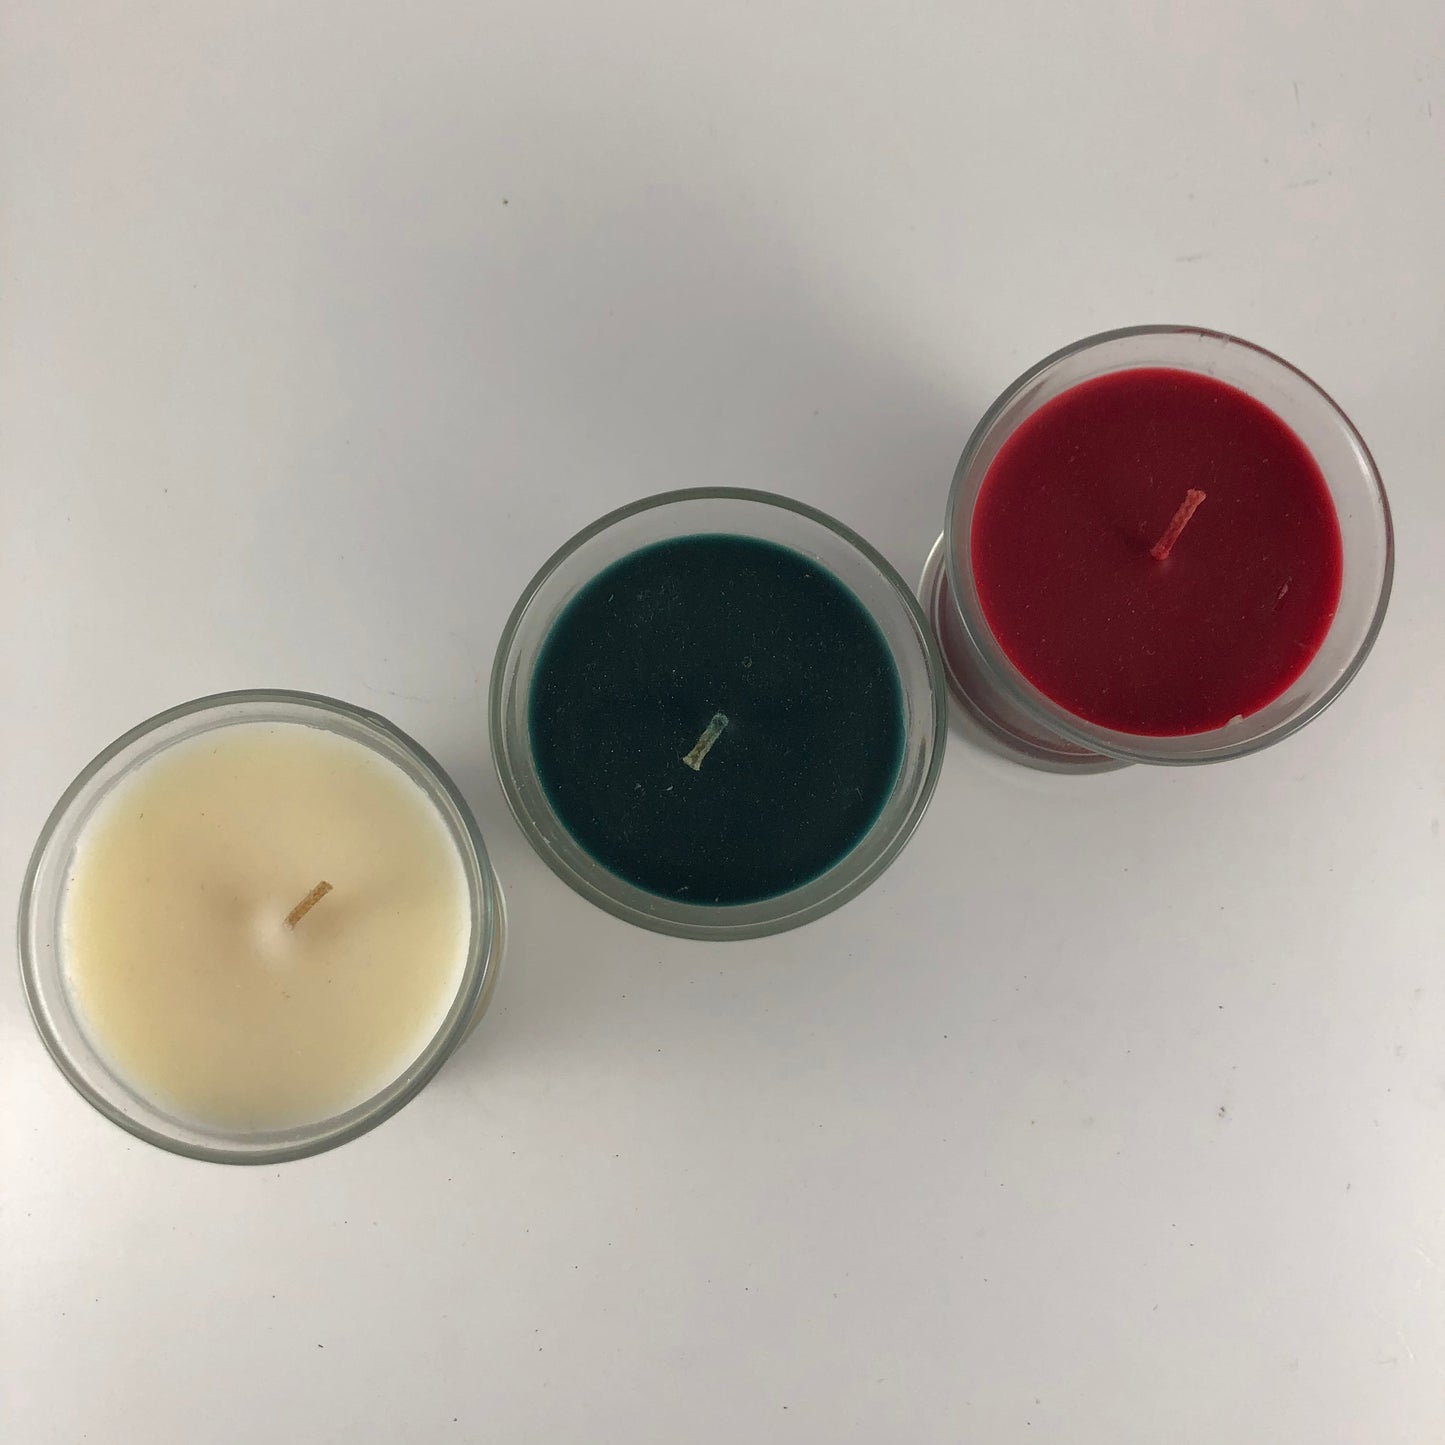 P9574 - Trio of mini winter jar candles